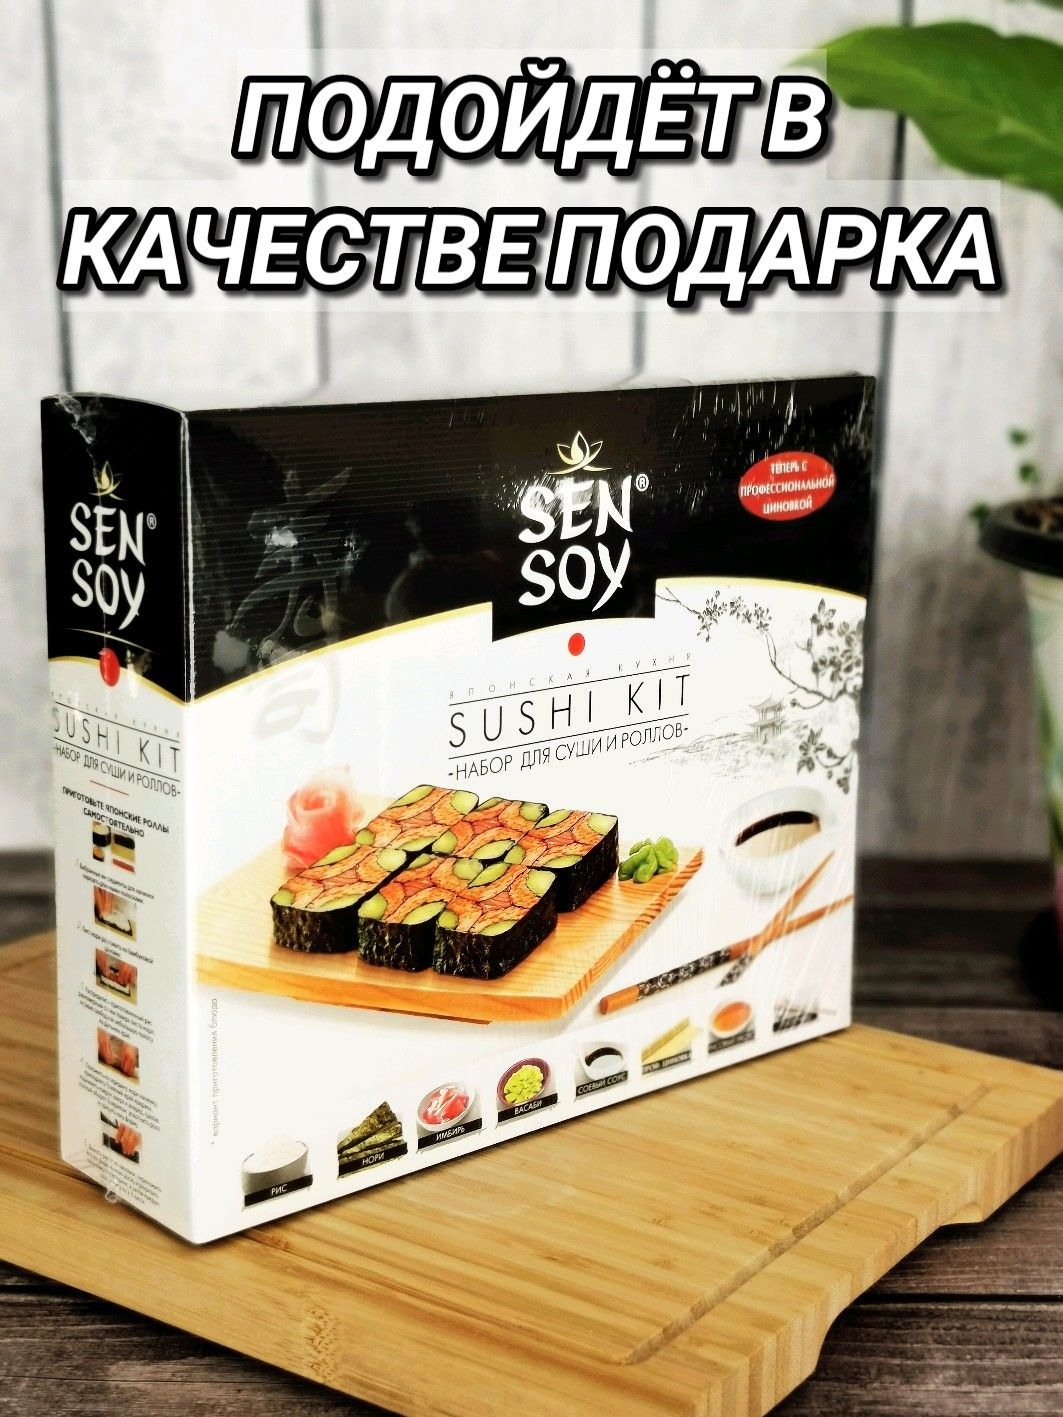 Sen soy набор для суши цена фото 56